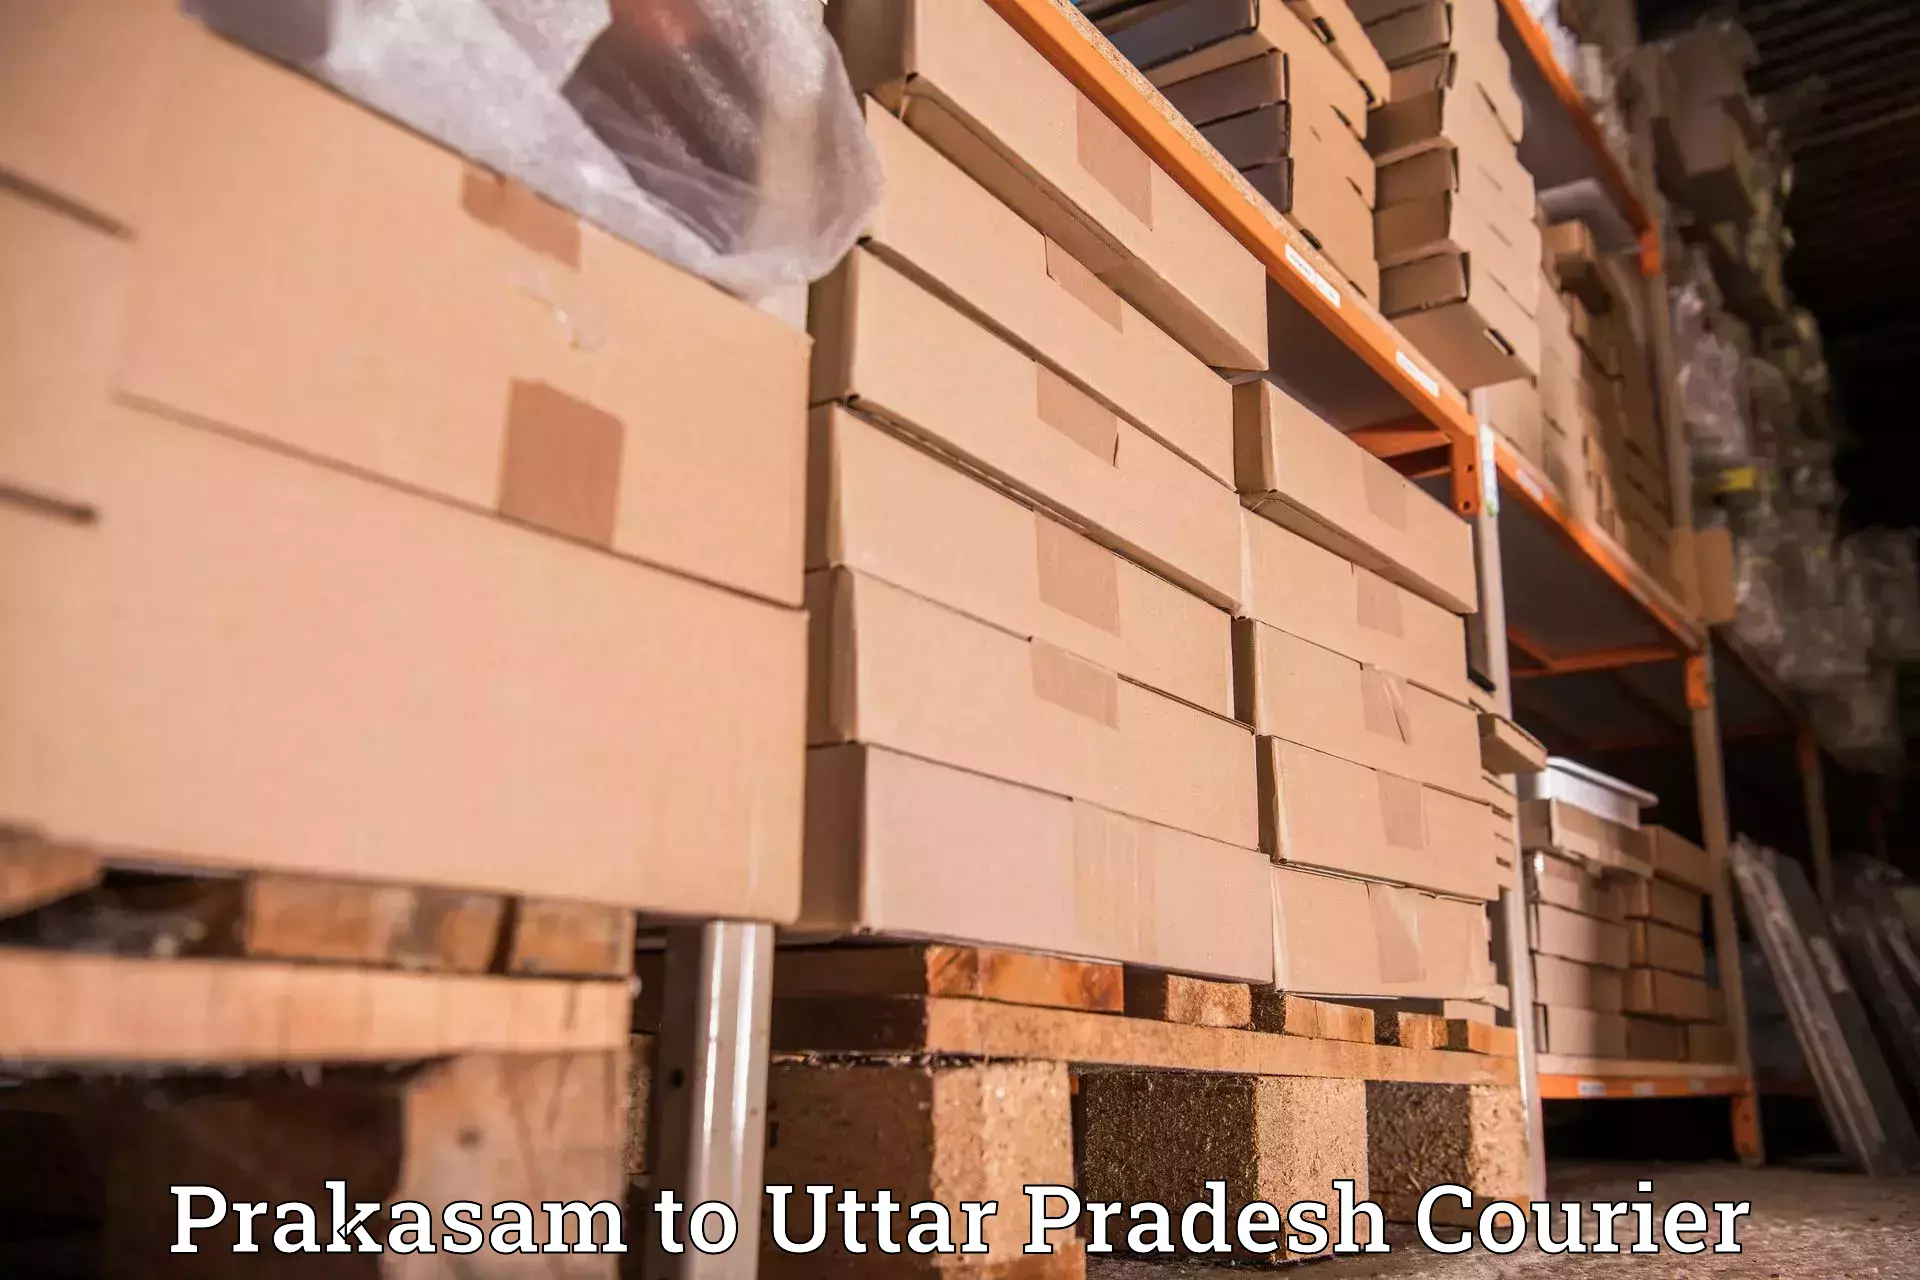 Holiday shipping services Prakasam to Aligarh